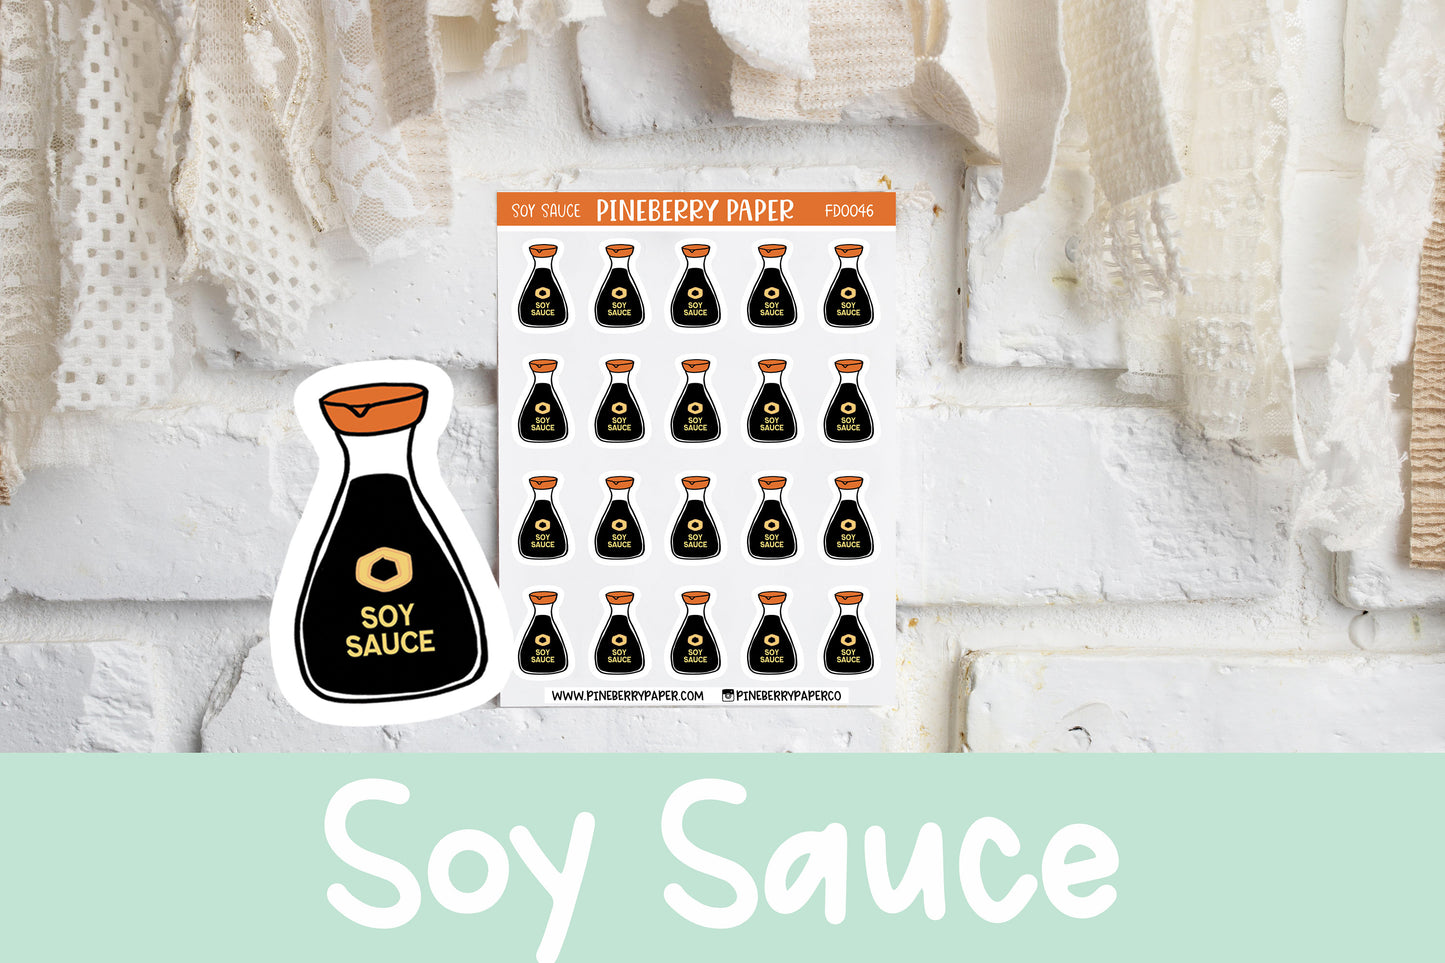 Soy Sauce Bottles | FD0046